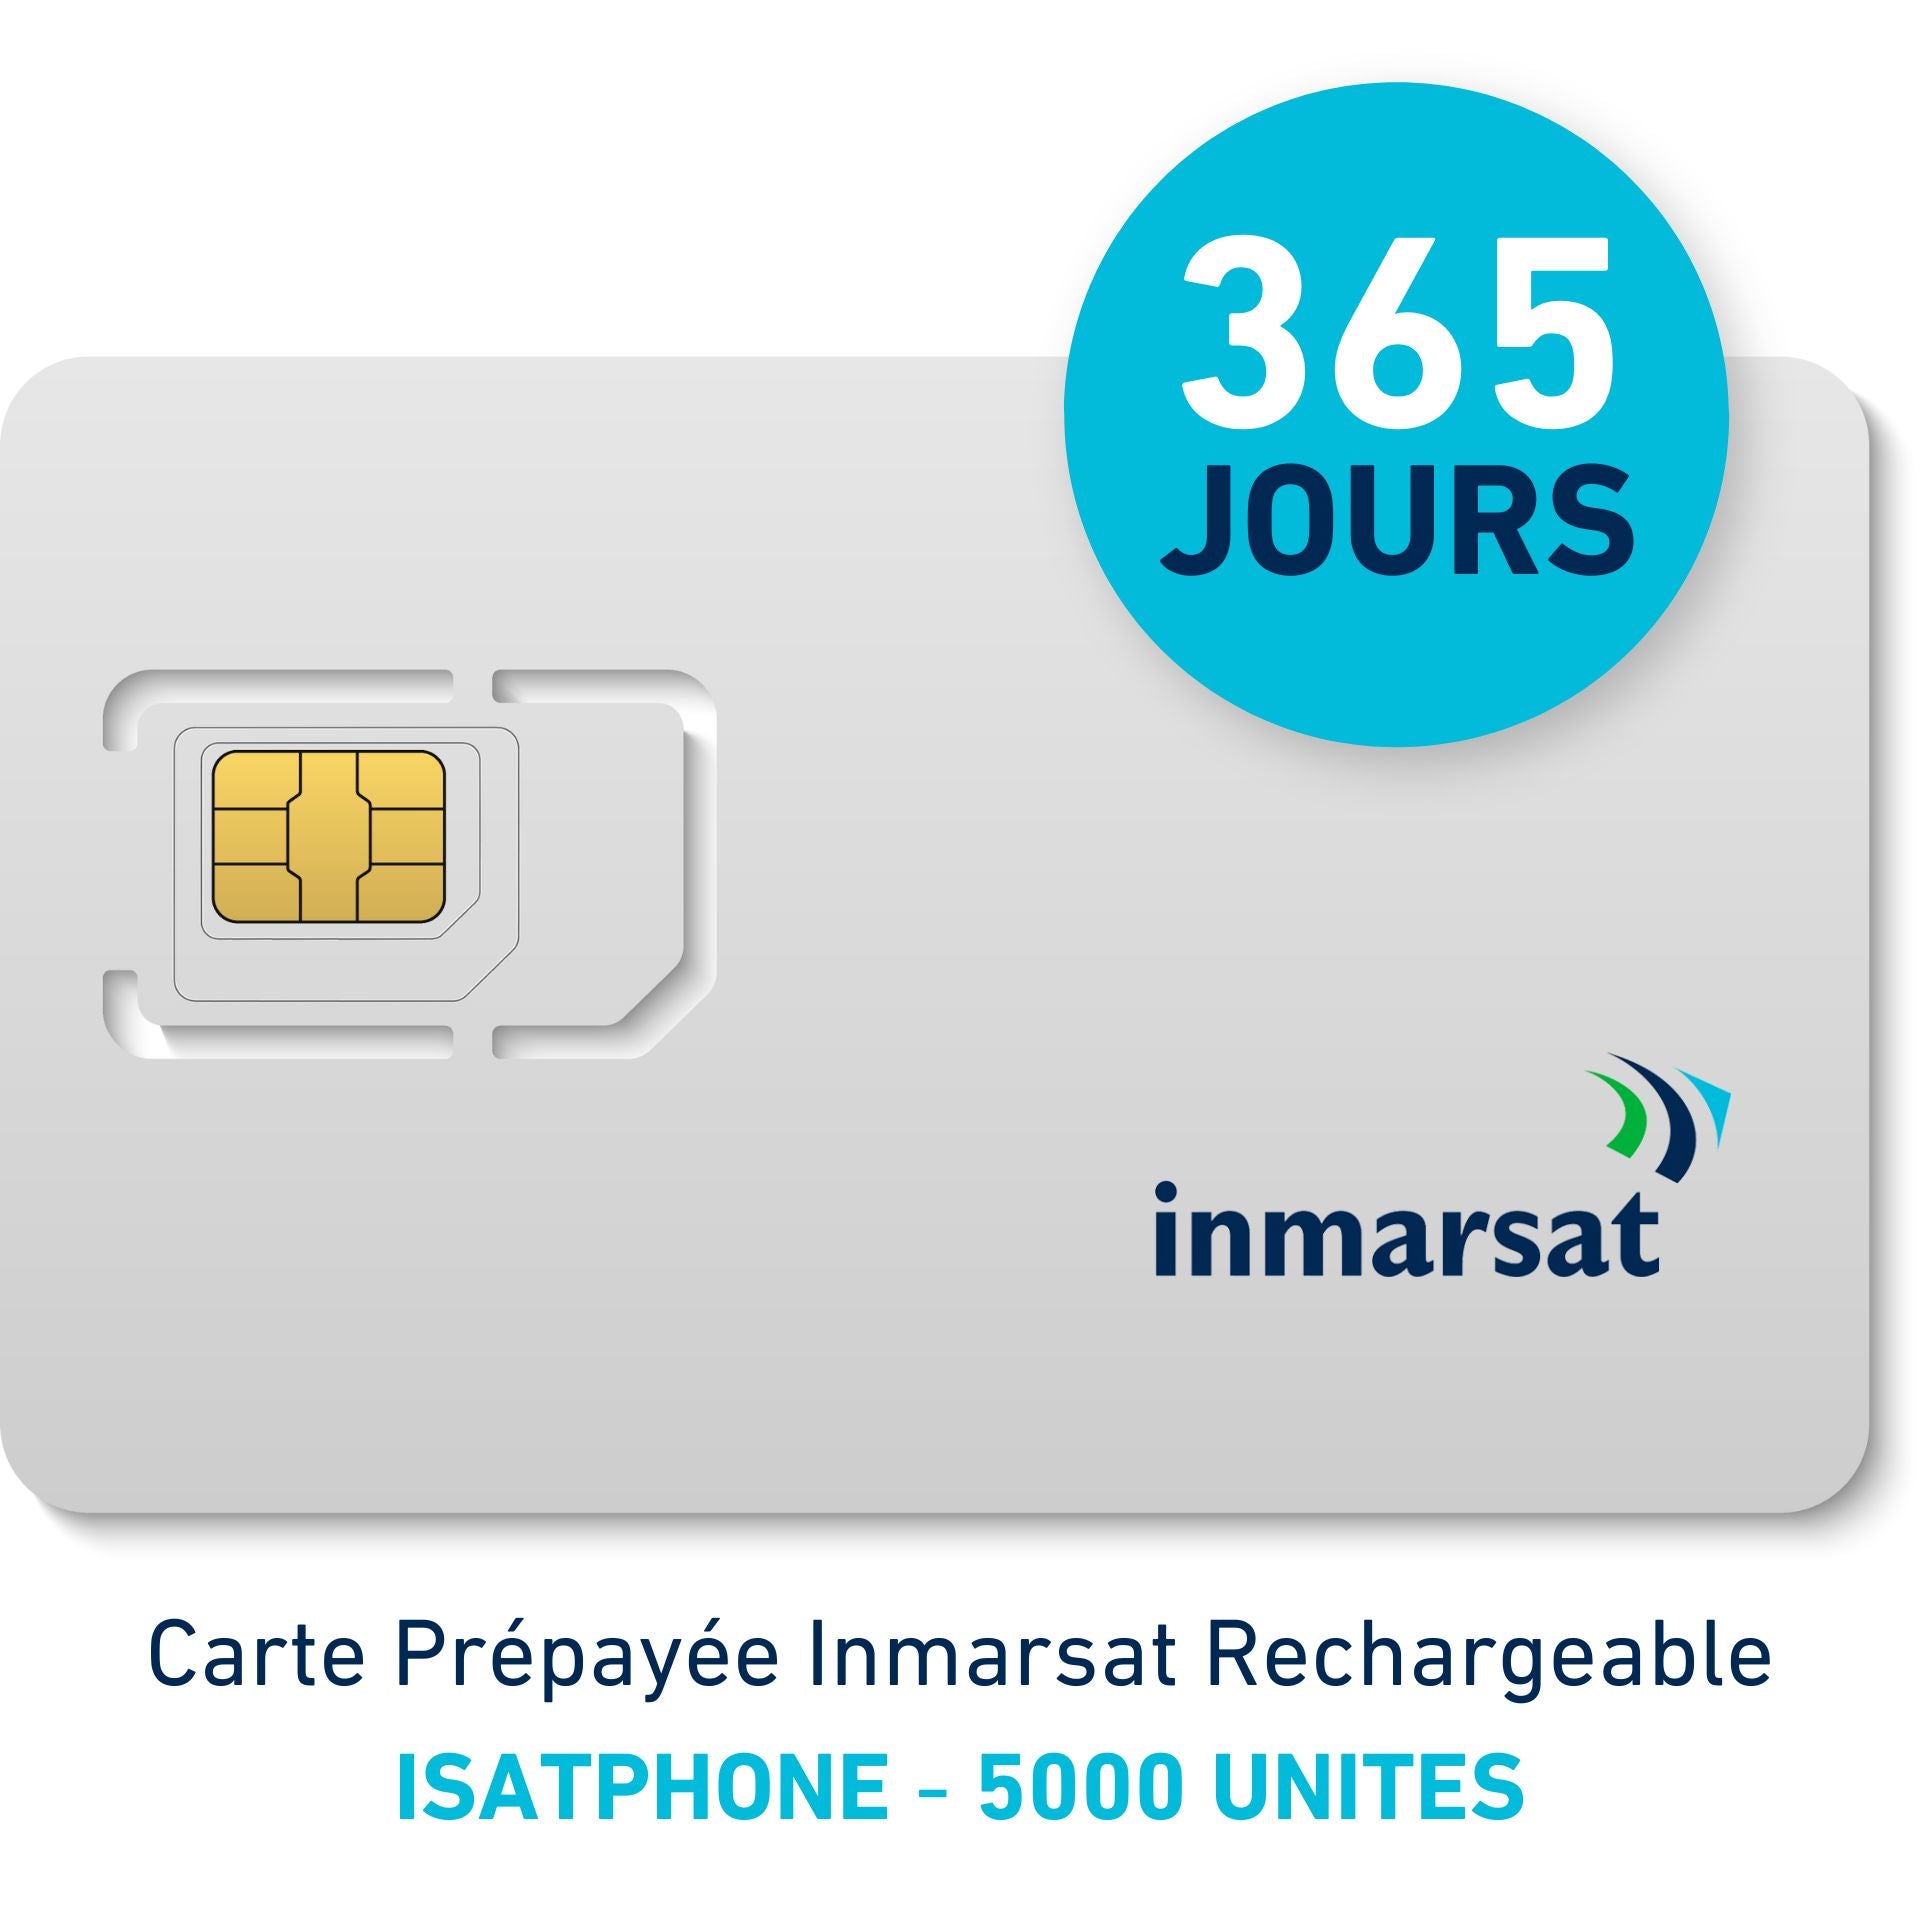 Carte Prépayée INMARSAT Rechargeable ISATPHONE - 5000 UNITES - 365 JOURS